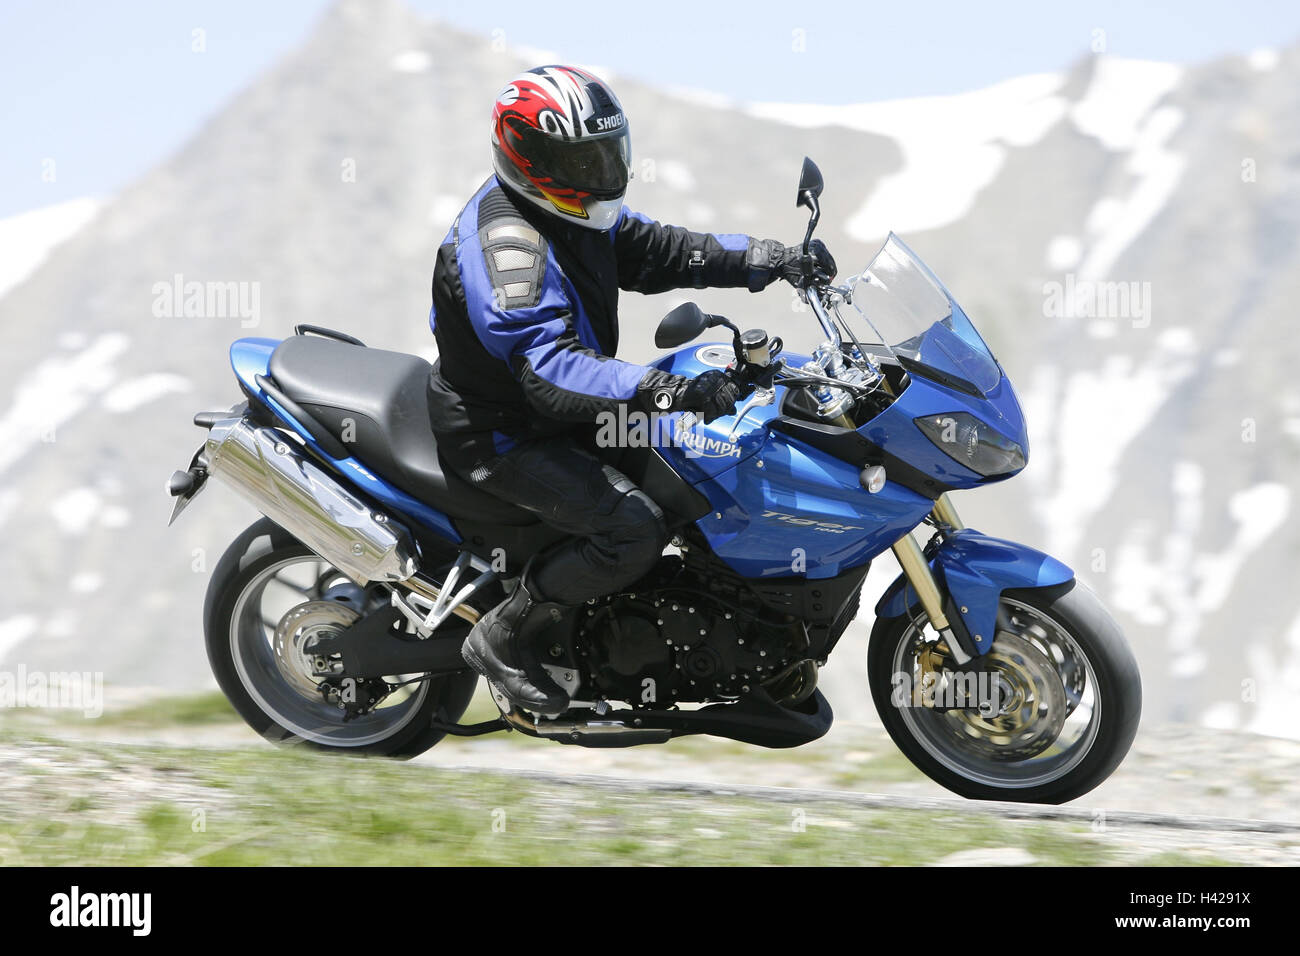 Motorrad-Fun bike "triumph Tiger Stockfotografie - Alamy